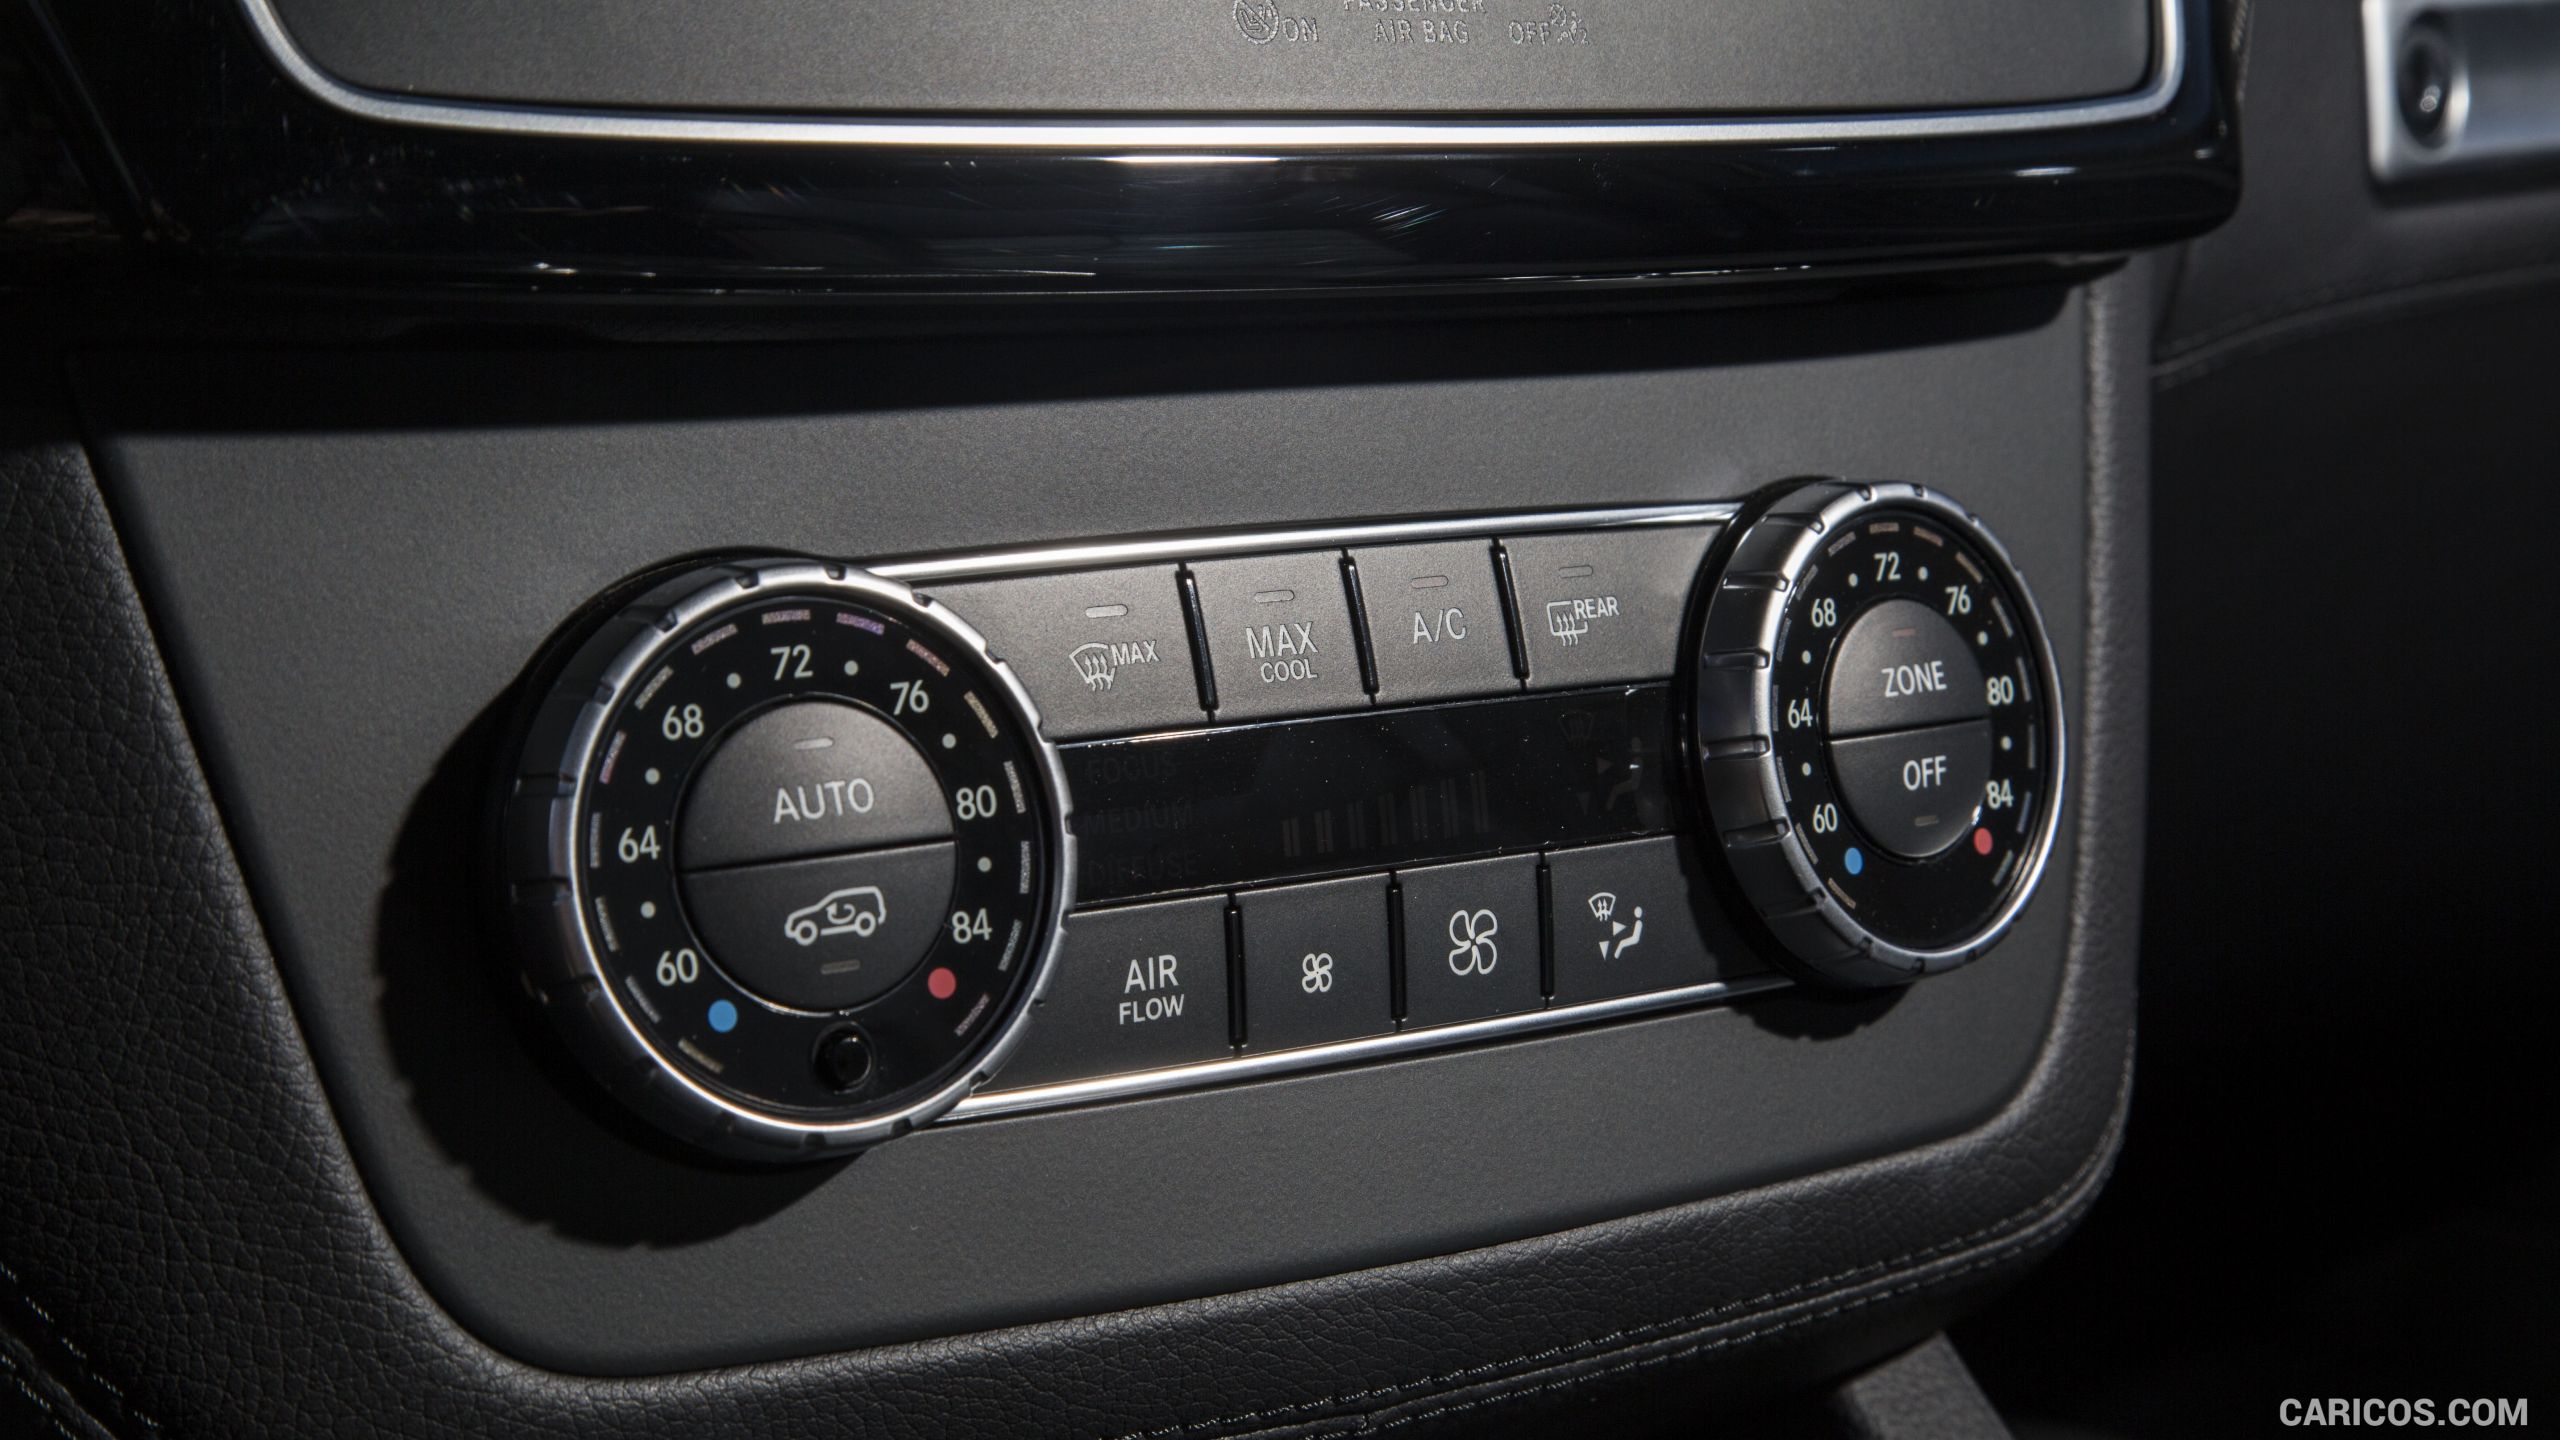 2016 Mercedes-Benz C450 AMG Sedan (US-Spec) - Interior, Controls, #116 of 122